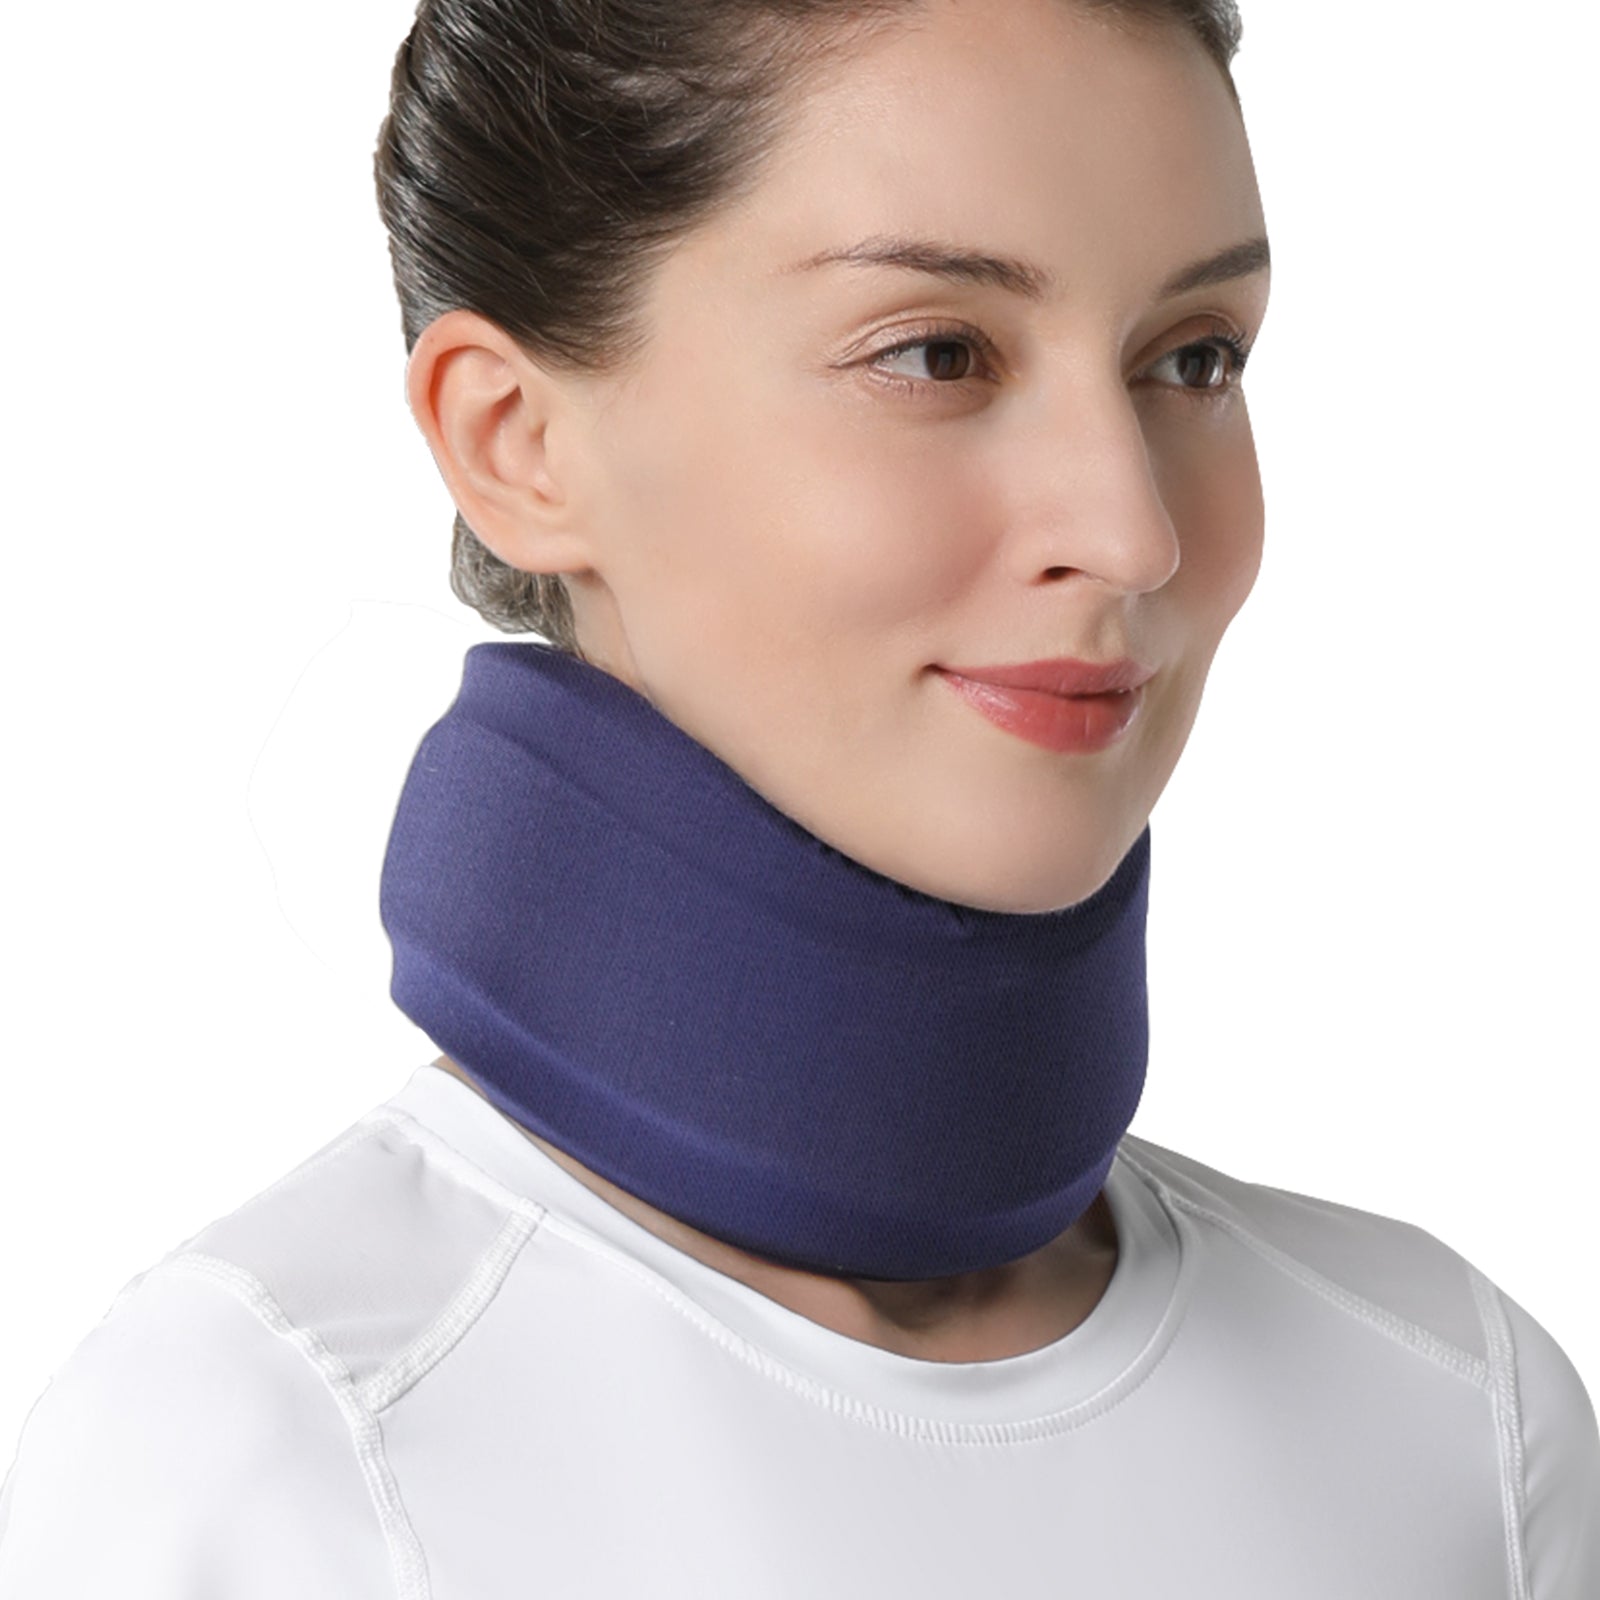 VELPEAU Neck Brace -Foam Cervical Collar - Soft Neck Support